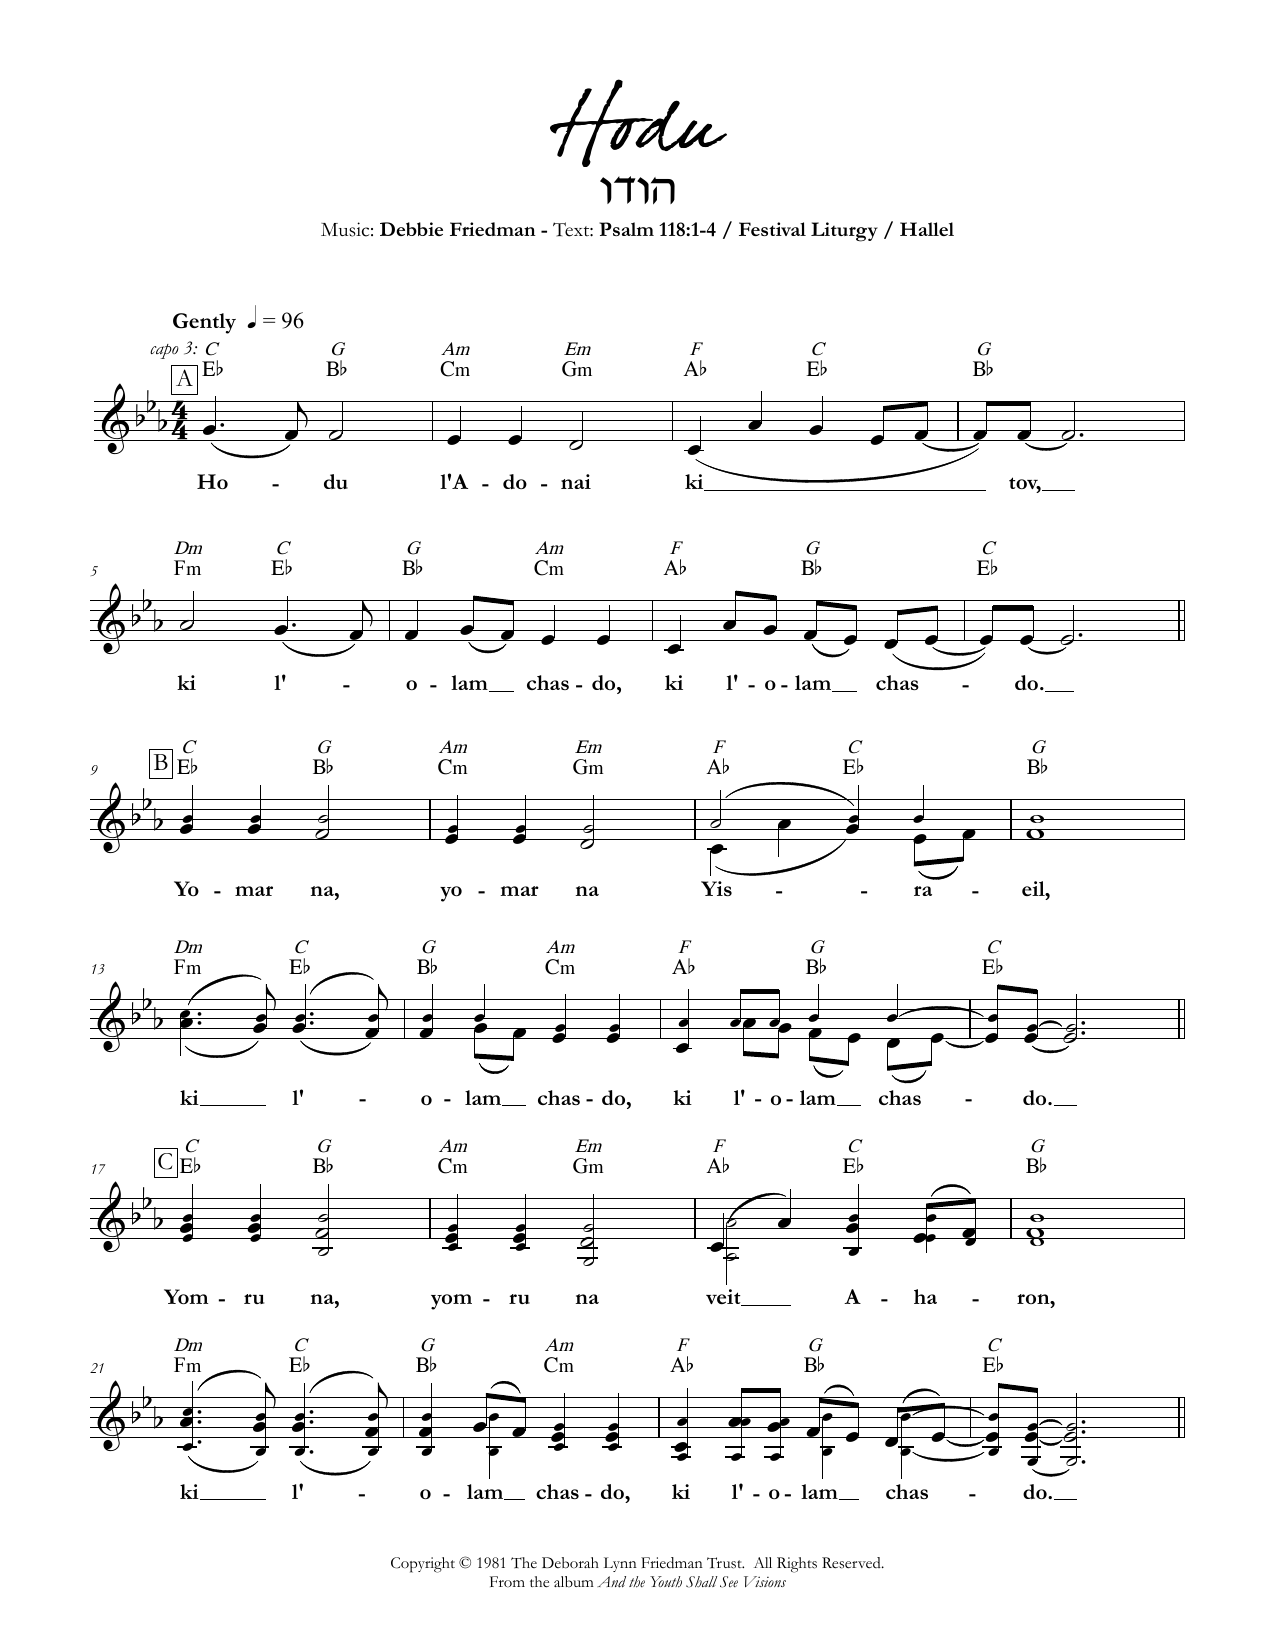 Debbie Friedman Hodu sheet music notes and chords arranged for Lead Sheet / Fake Book